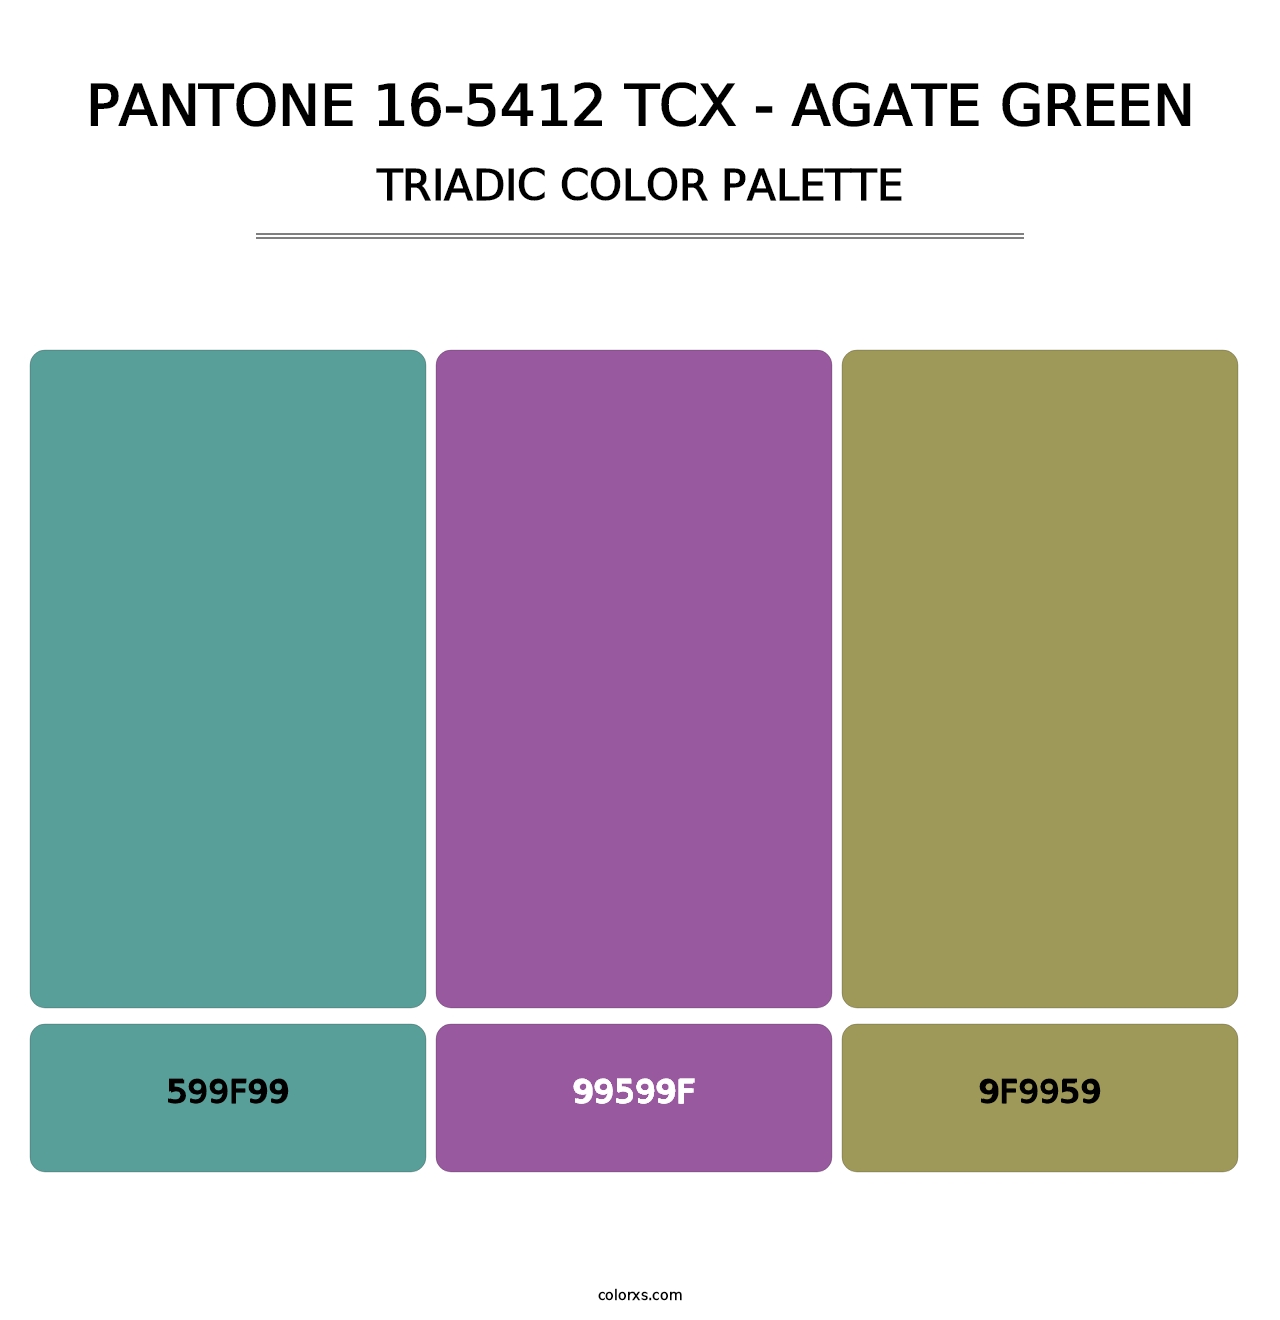 PANTONE 16-5412 TCX - Agate Green - Triadic Color Palette